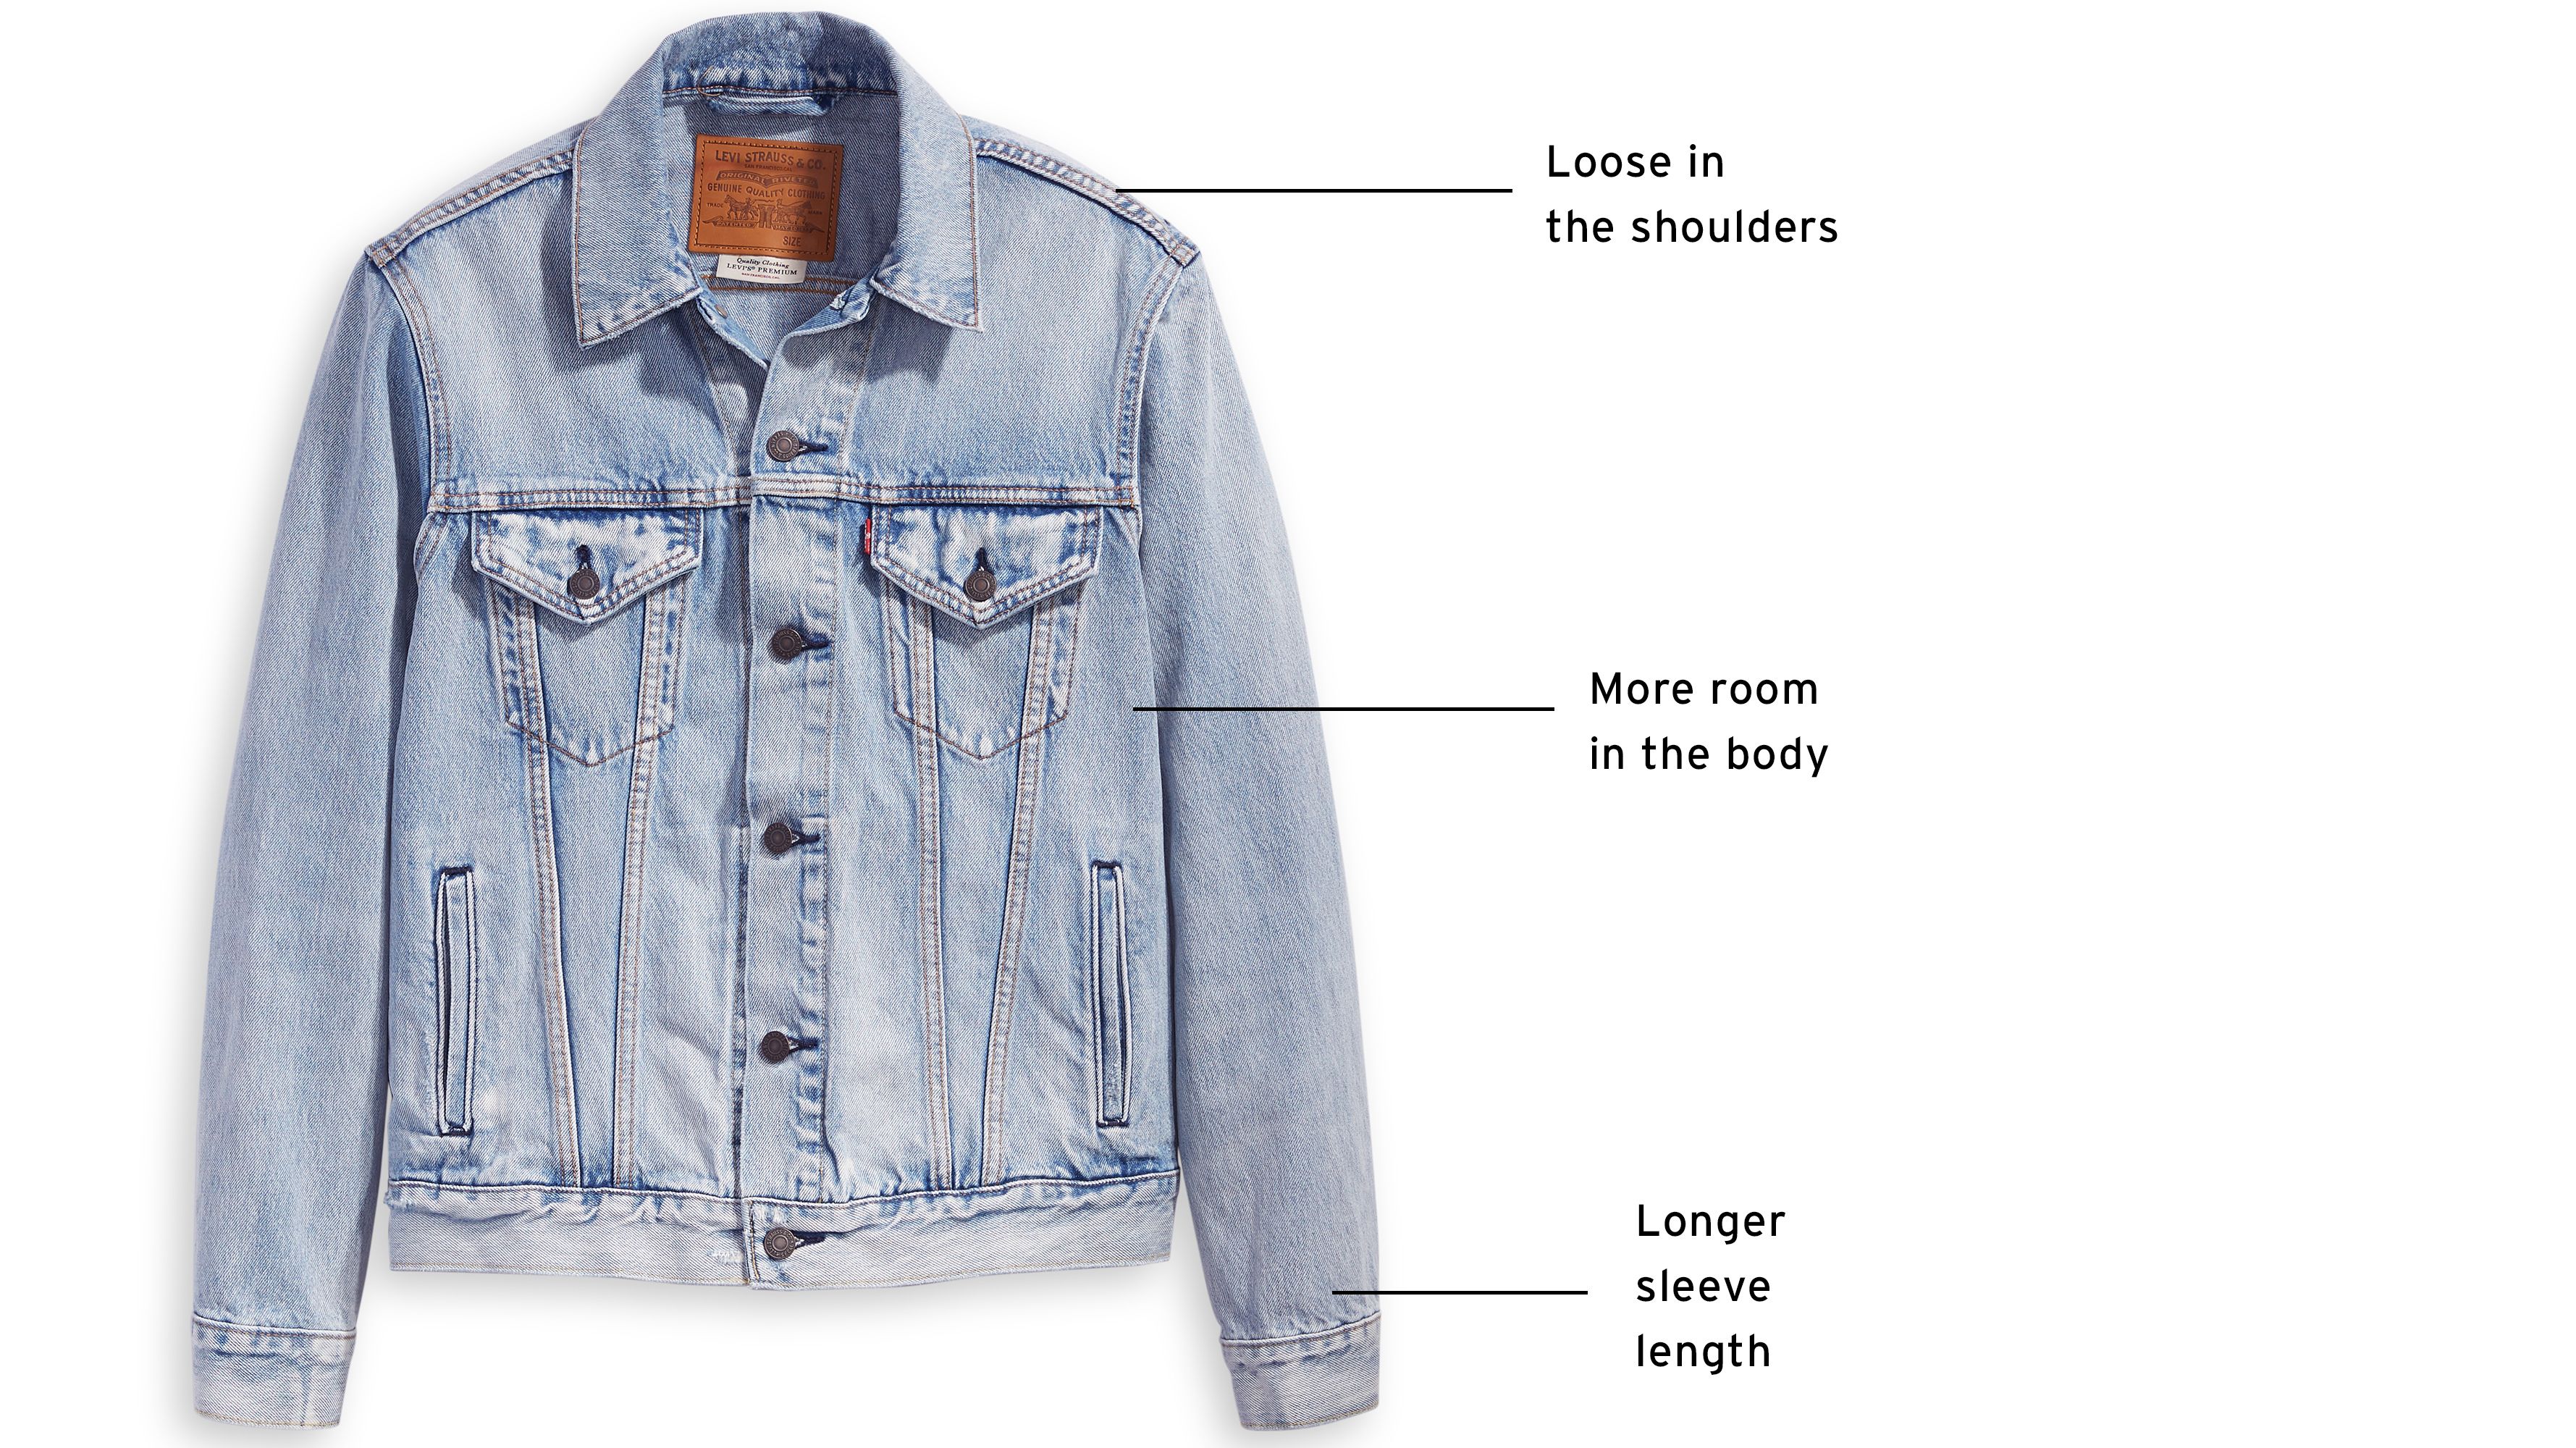 levi's trucker jacket measurements